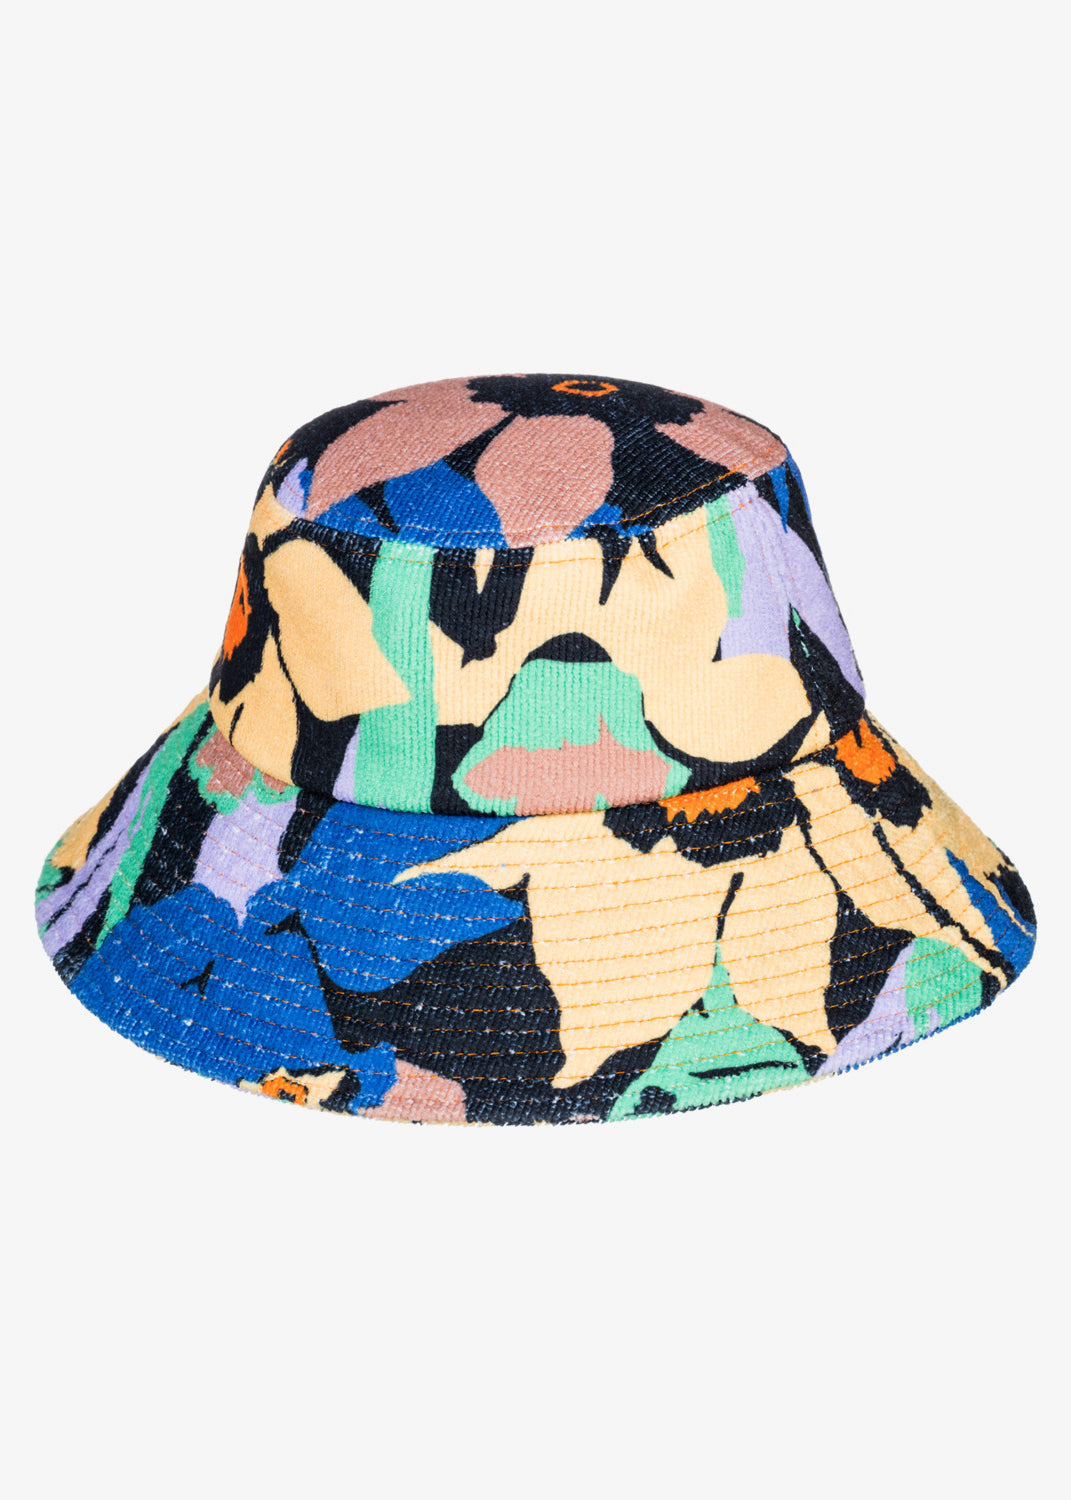 Mango Passion Bucket Hat by Roxy